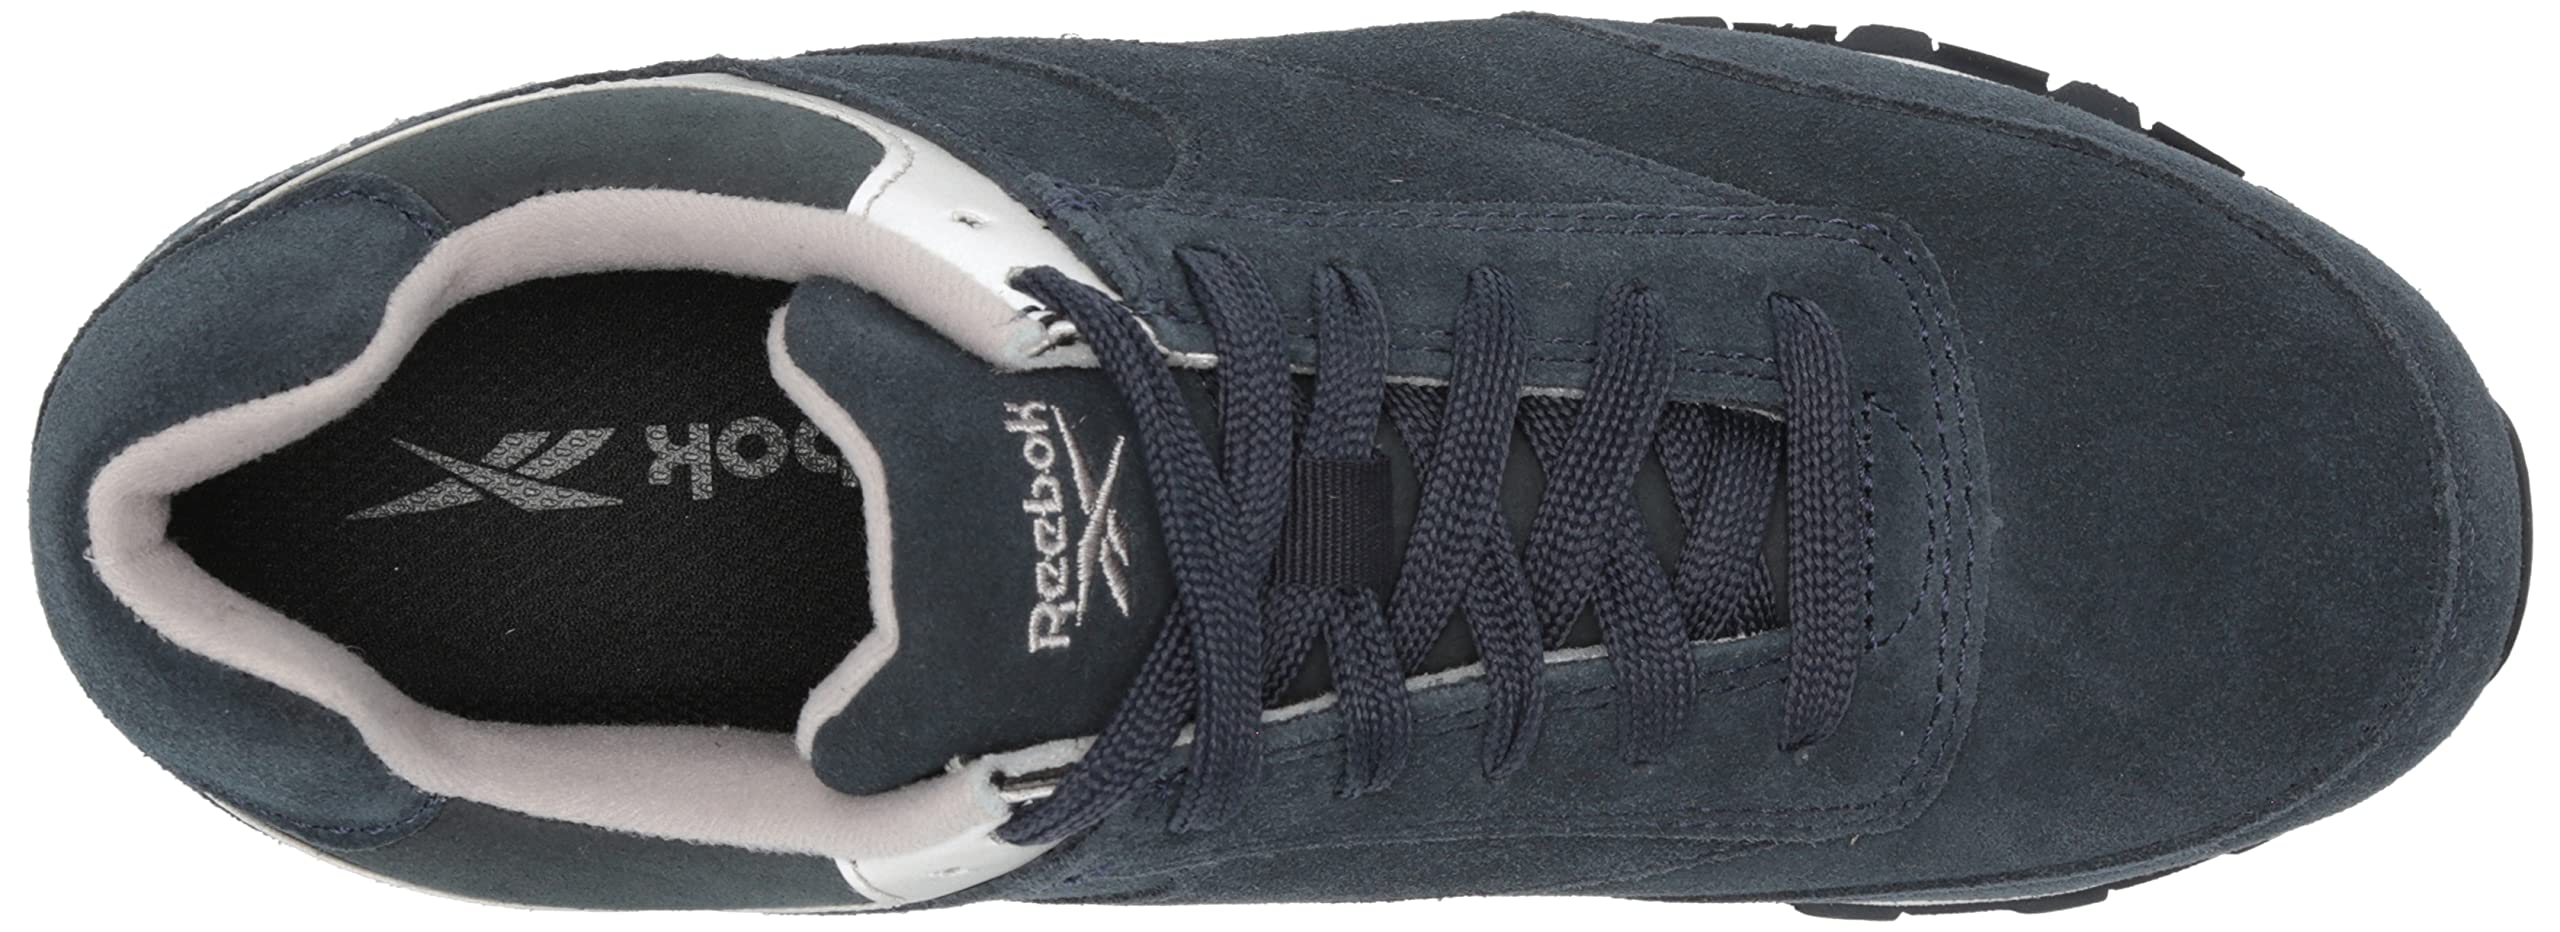 Reebok Work Men's Leelap RB1975 Safety Shoe,Blue